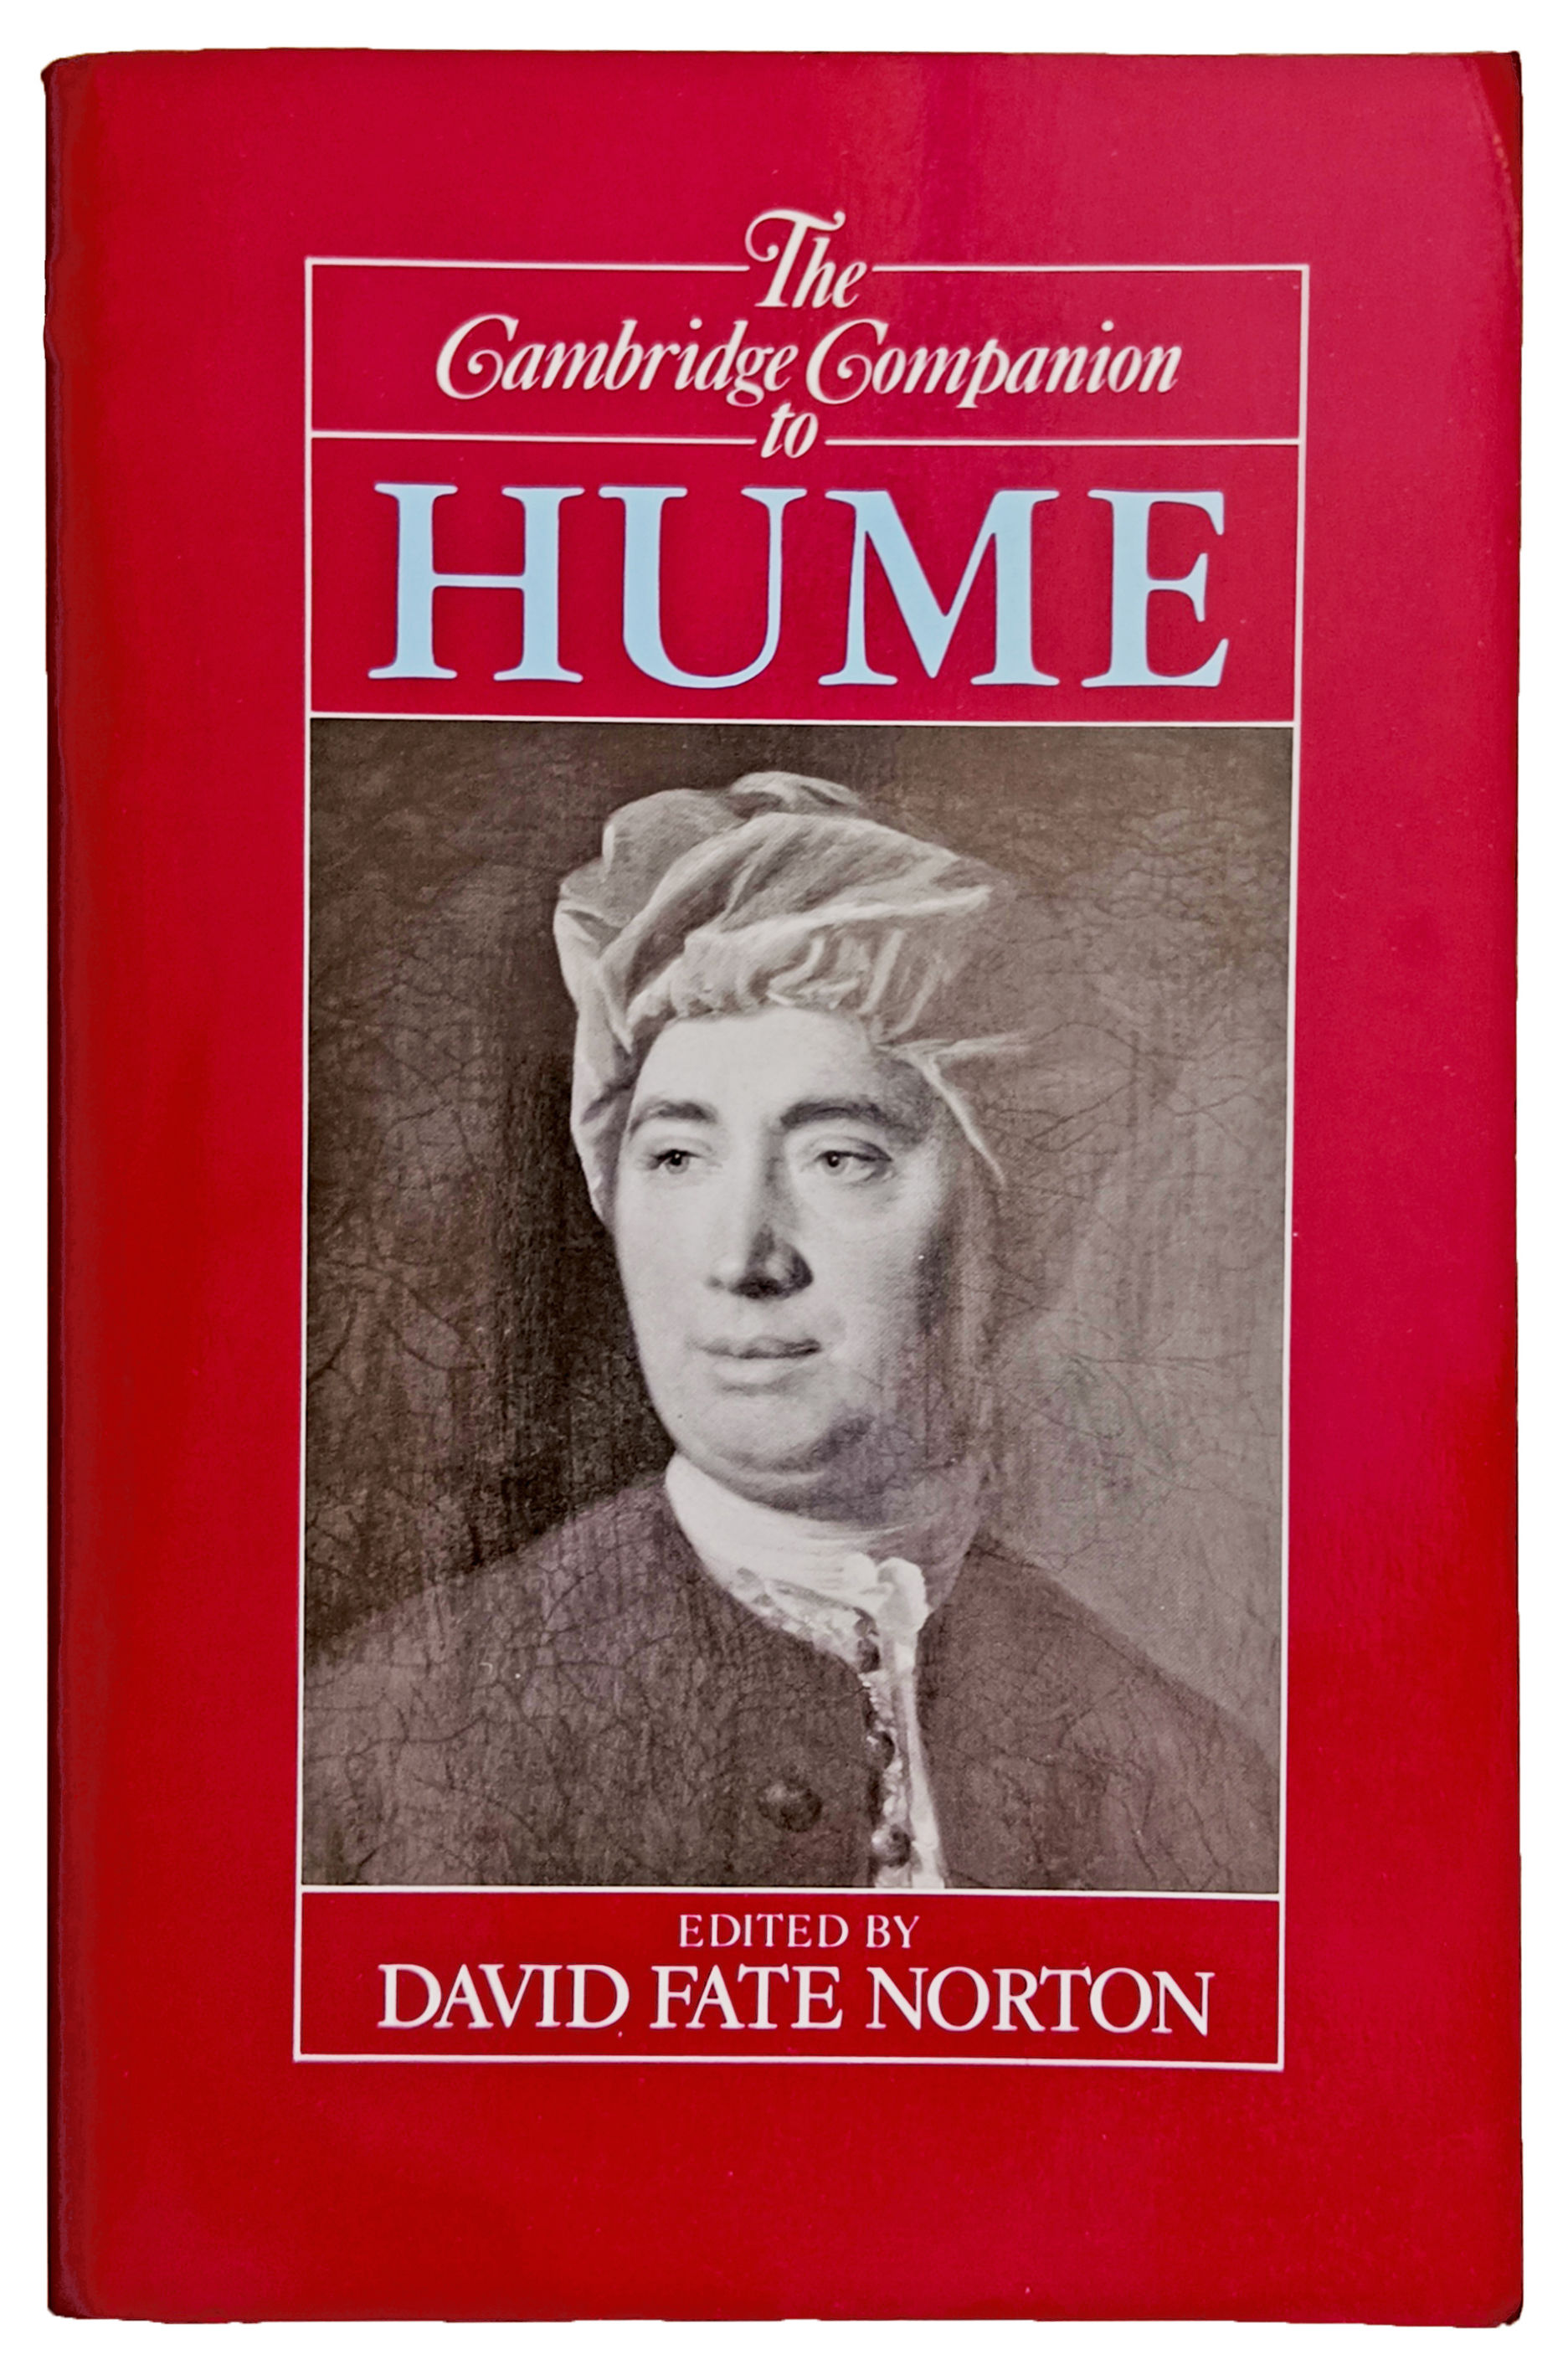 The Cambridge Companion to Hume. - HUME, David; David Fate Norton (ed.).